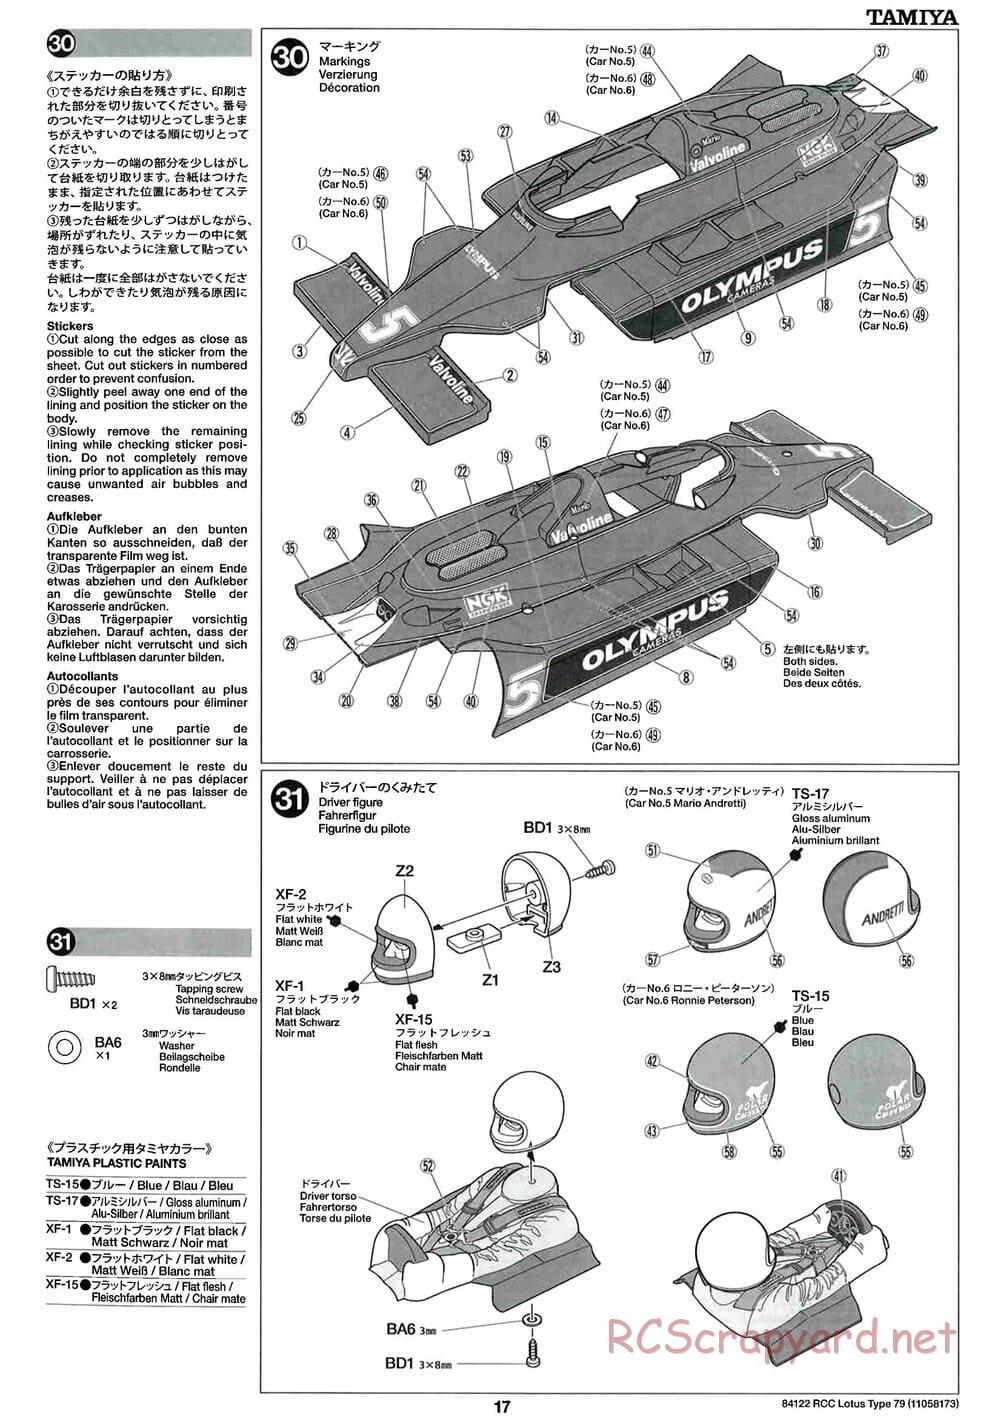 Tamiya - Lotus Type 79 - F104W Chassis - Manual - Page 17